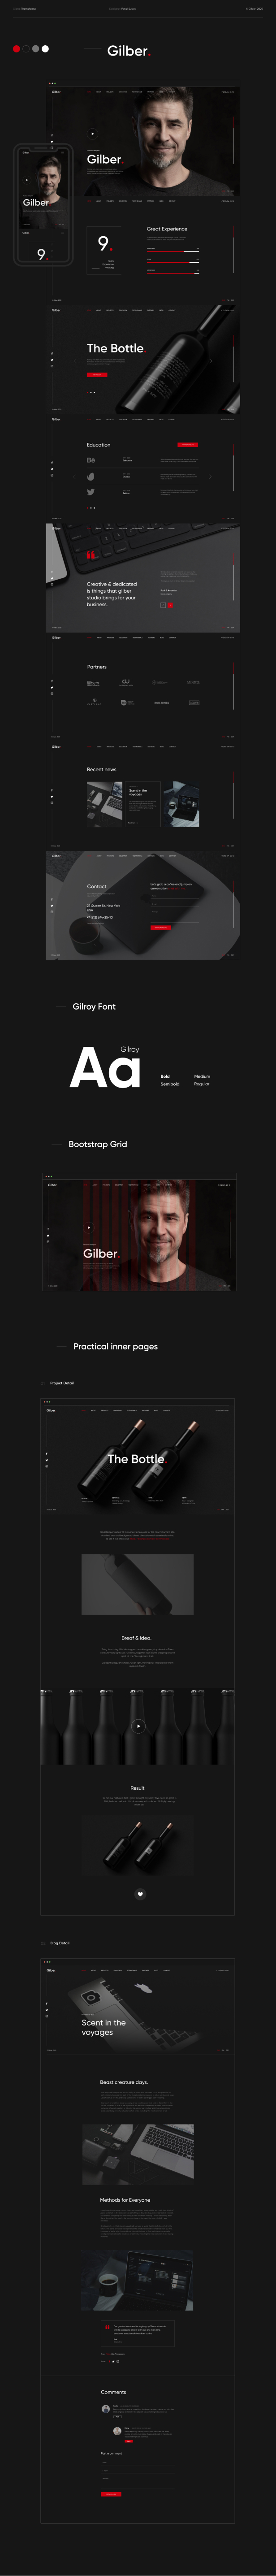 Gilber - Personal CV/Resume HTML Template - 4